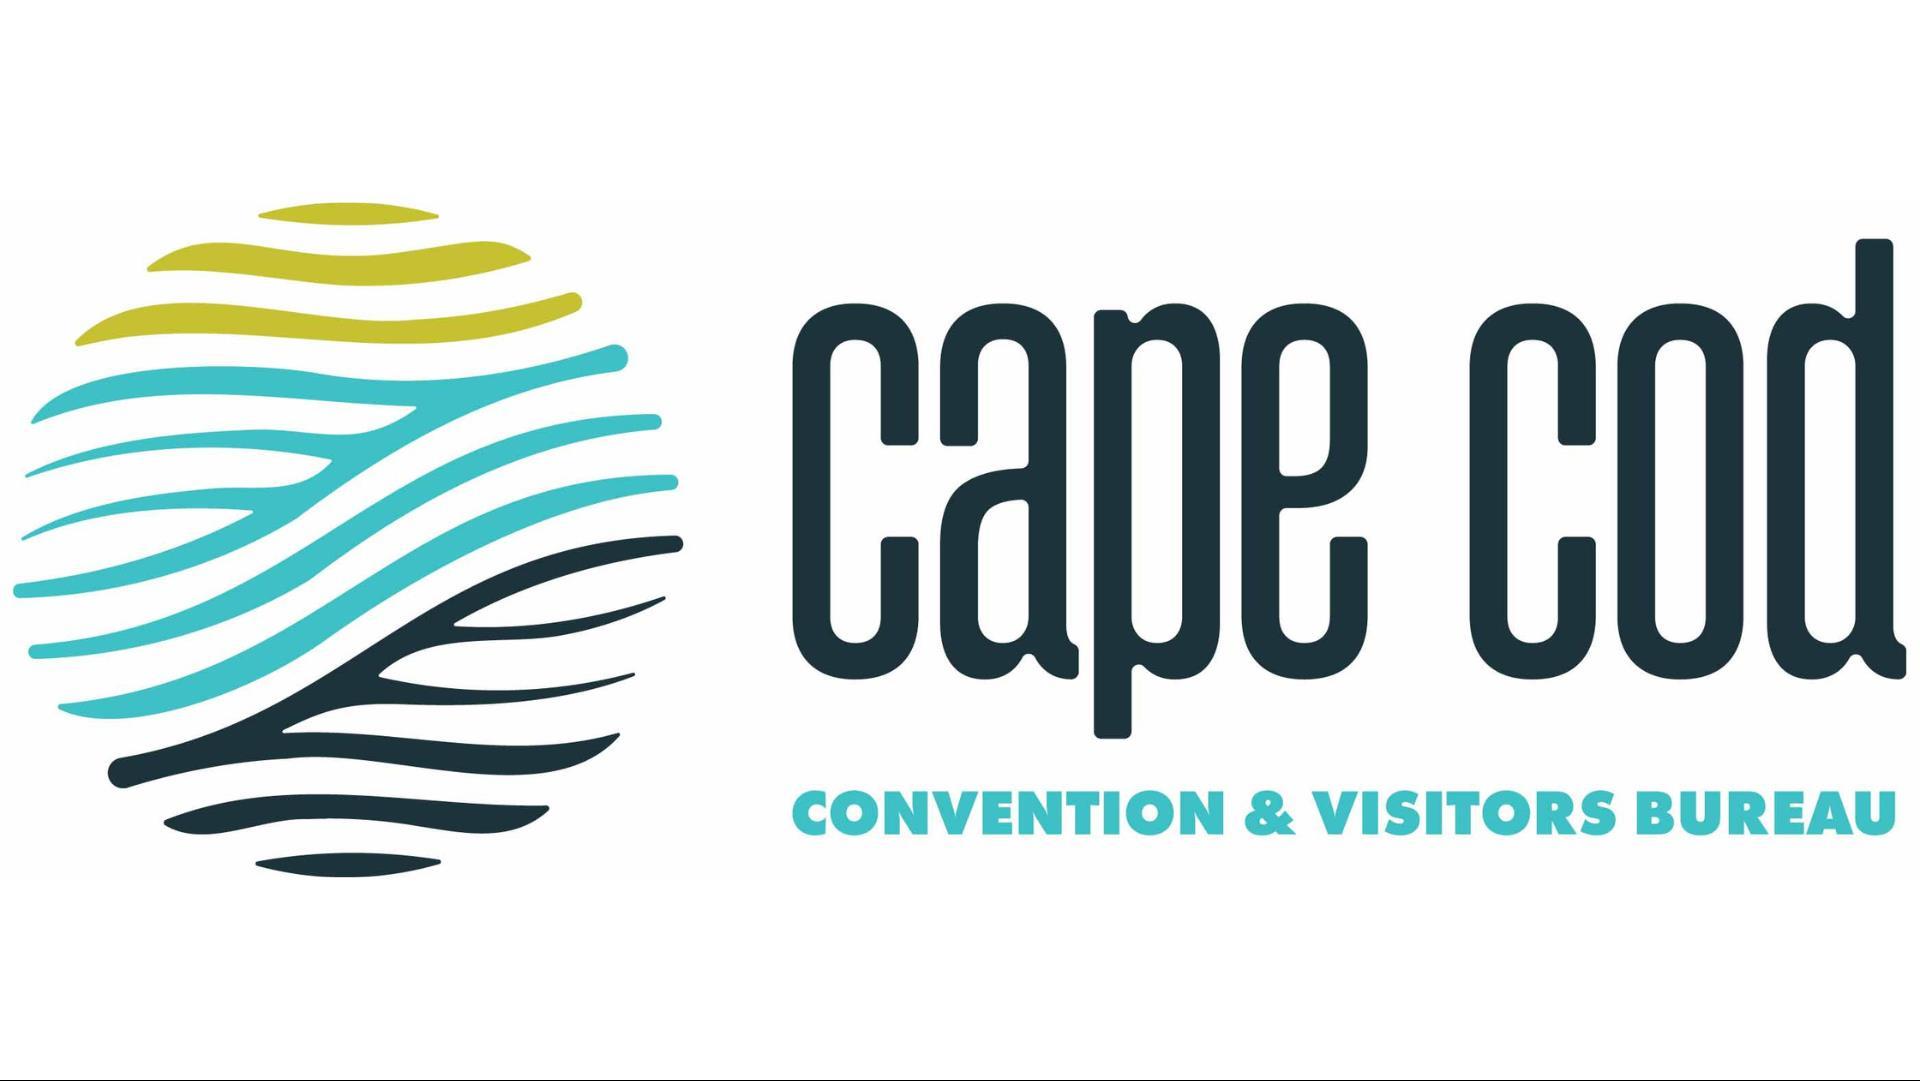 Cape Cod Chamber of Commerce/Convention & Visitors Bureau in Centerville, MA